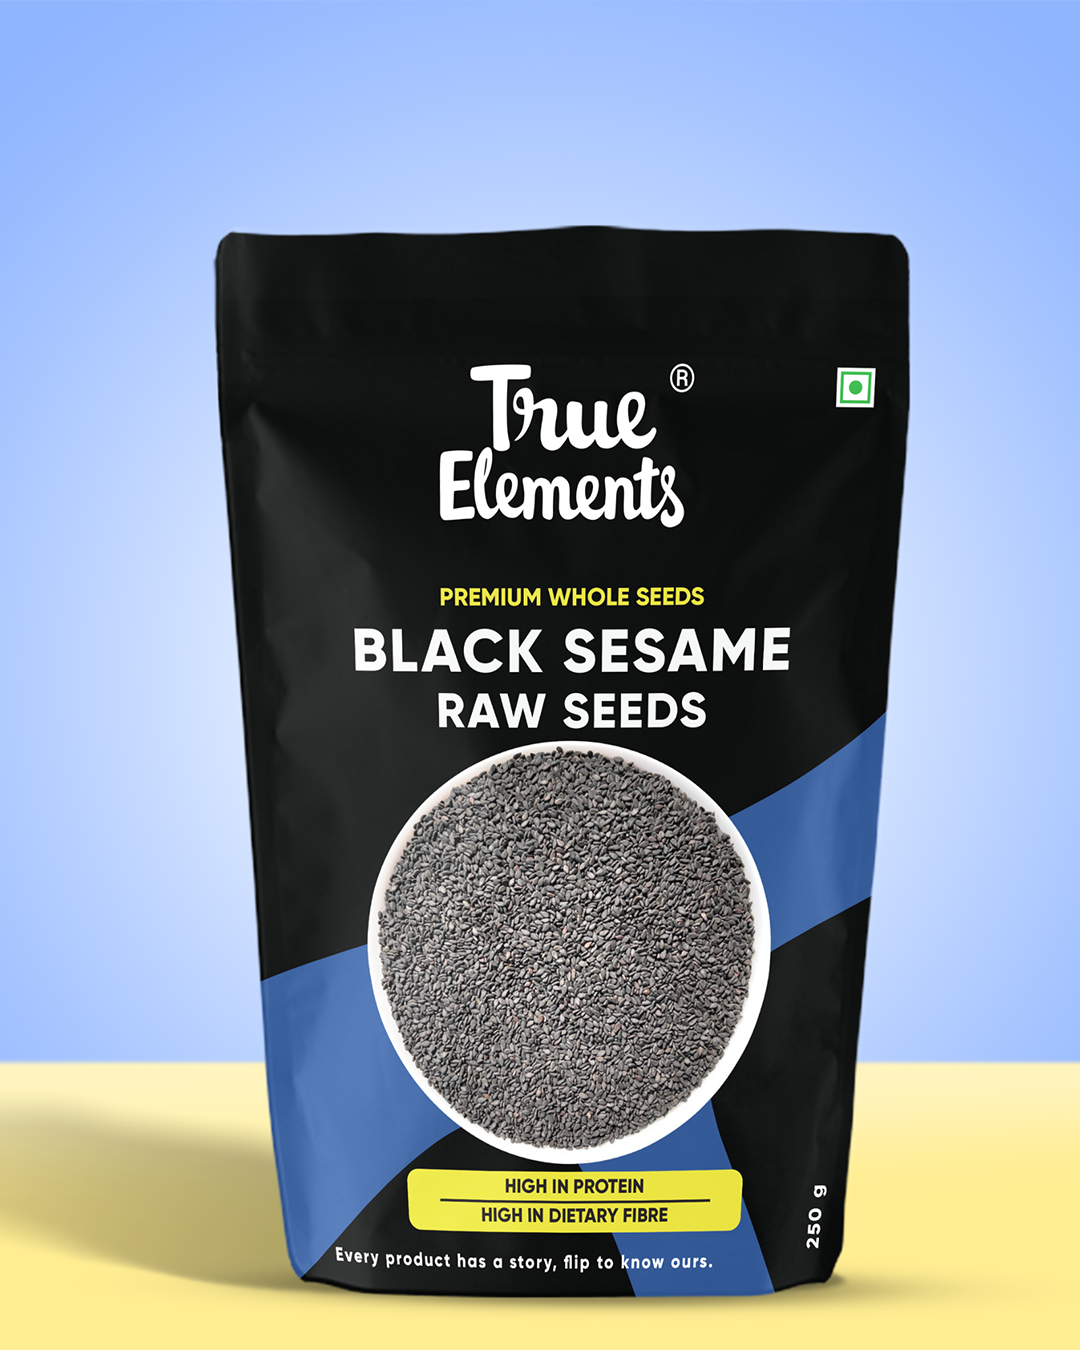 True elements raw black sesame seeds 250g Pouch (Premium Whole Seeds)